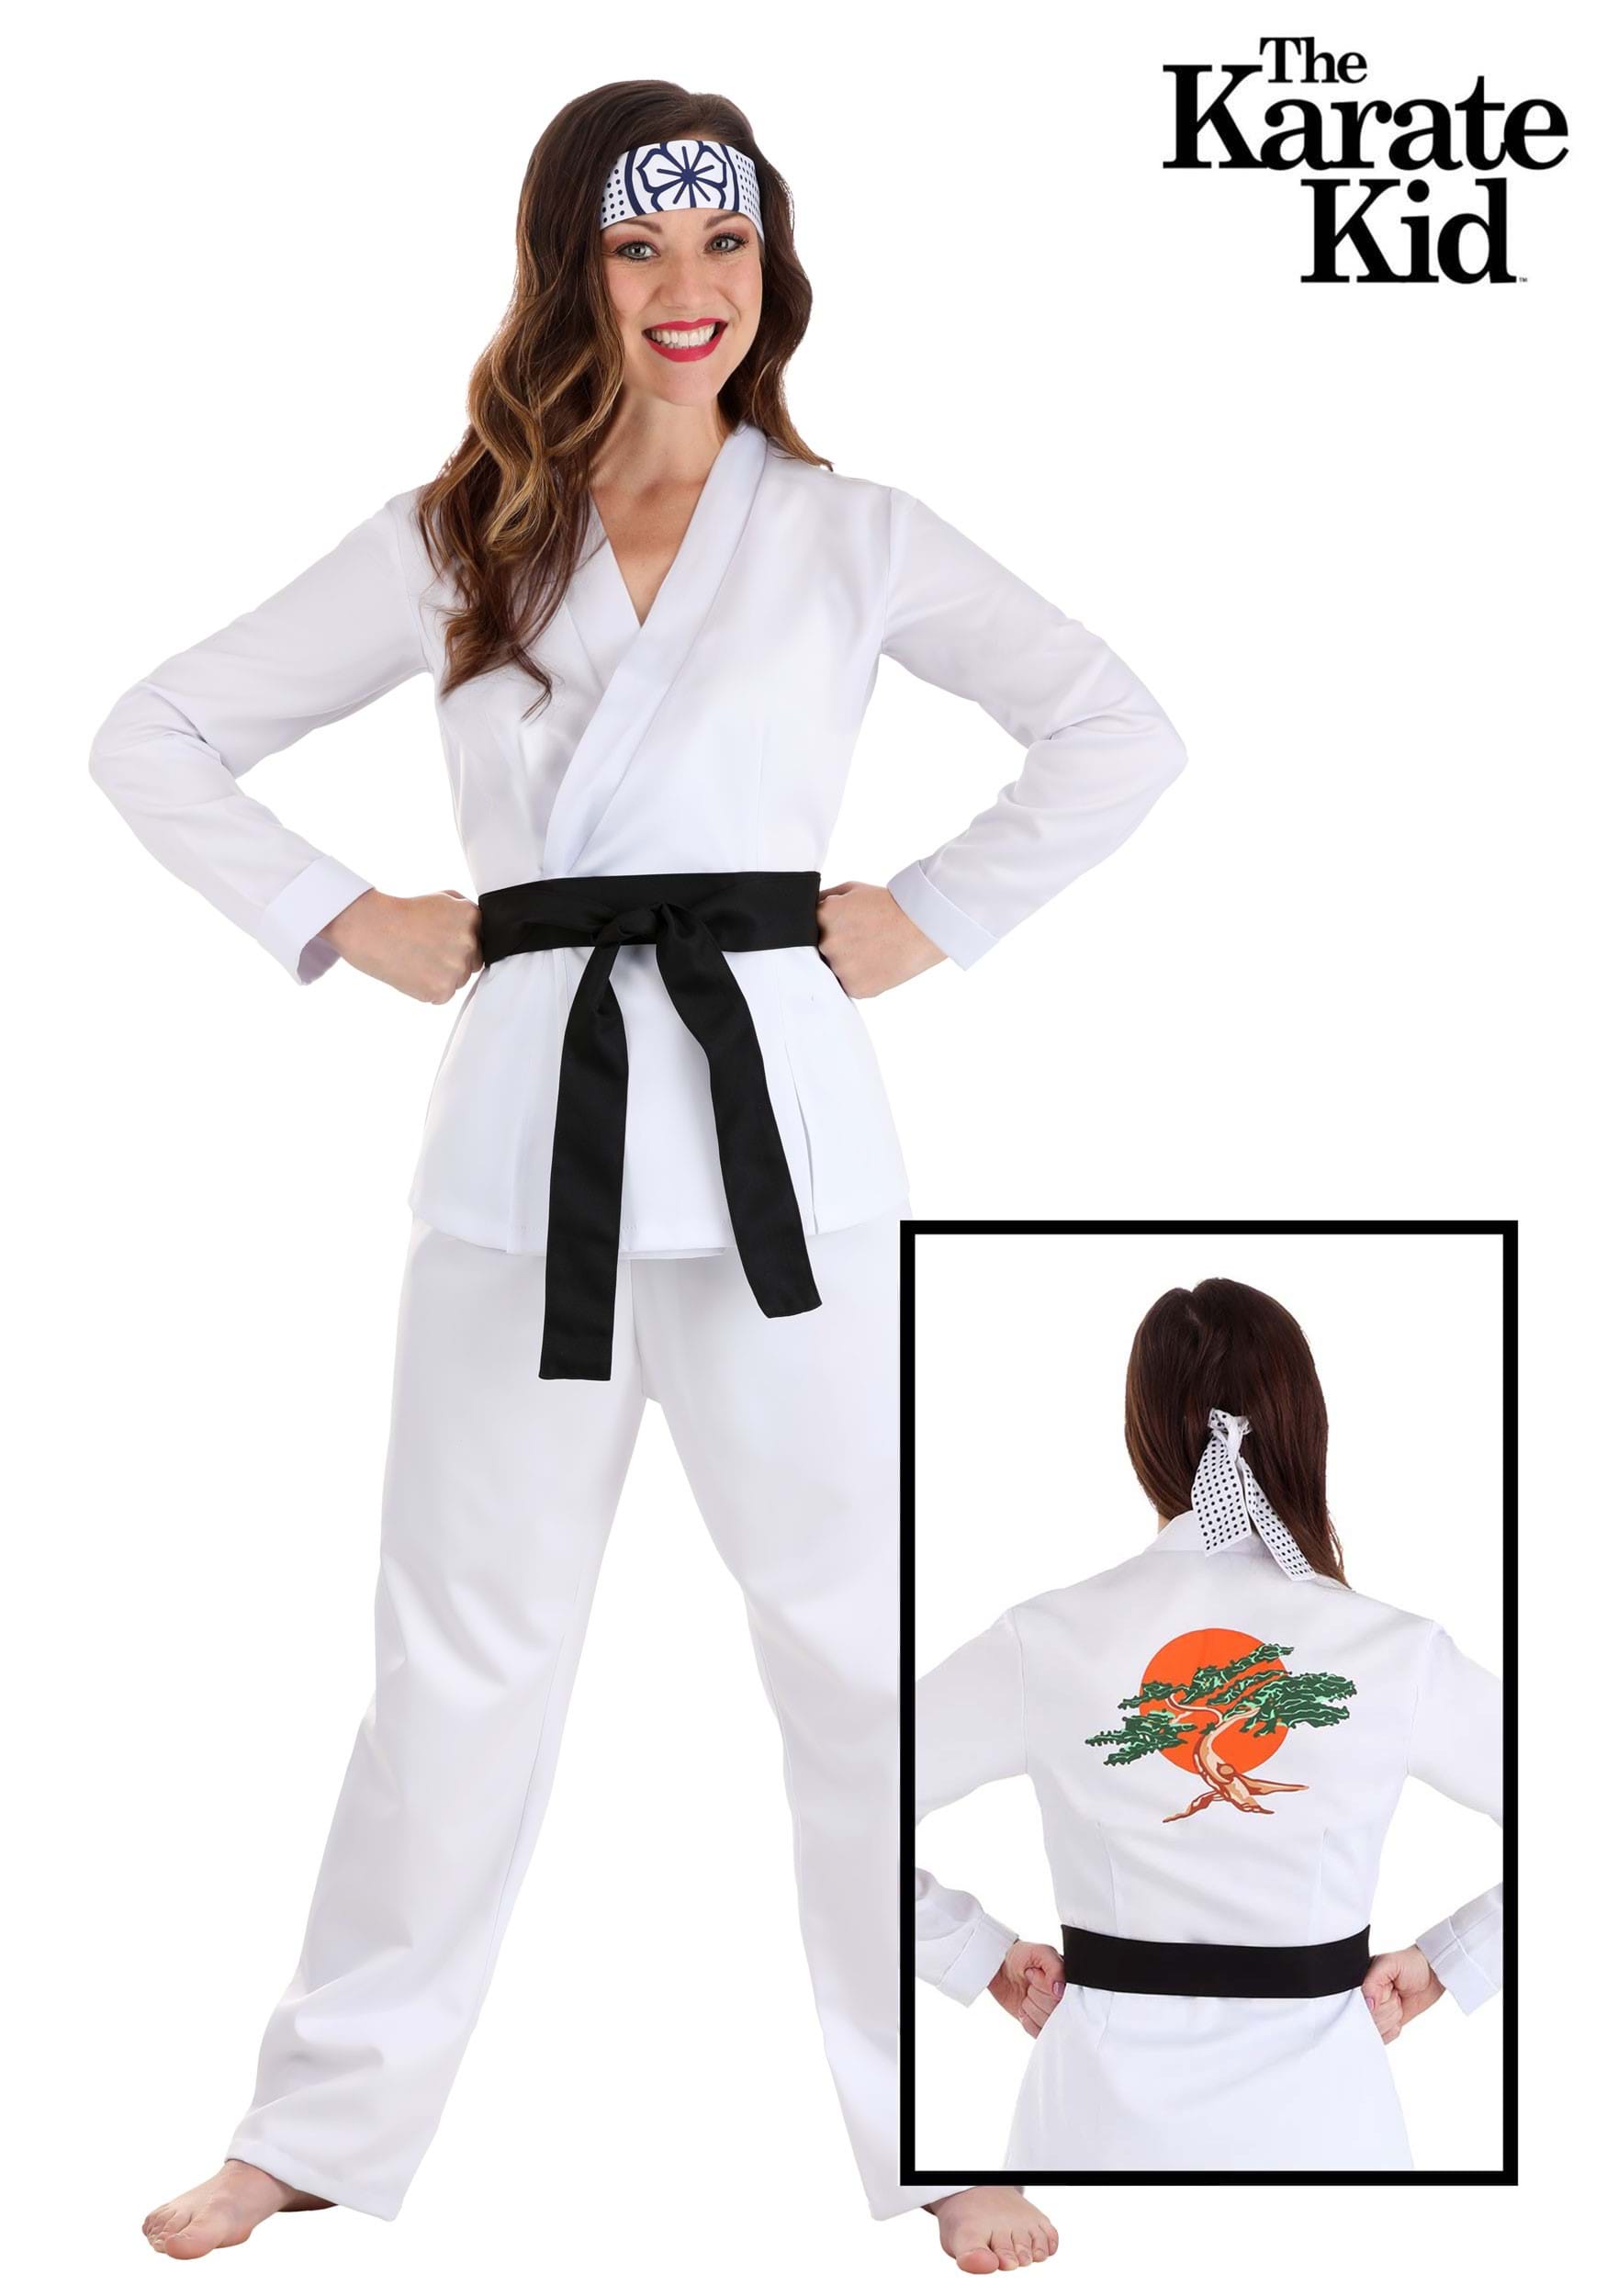 Karate costume